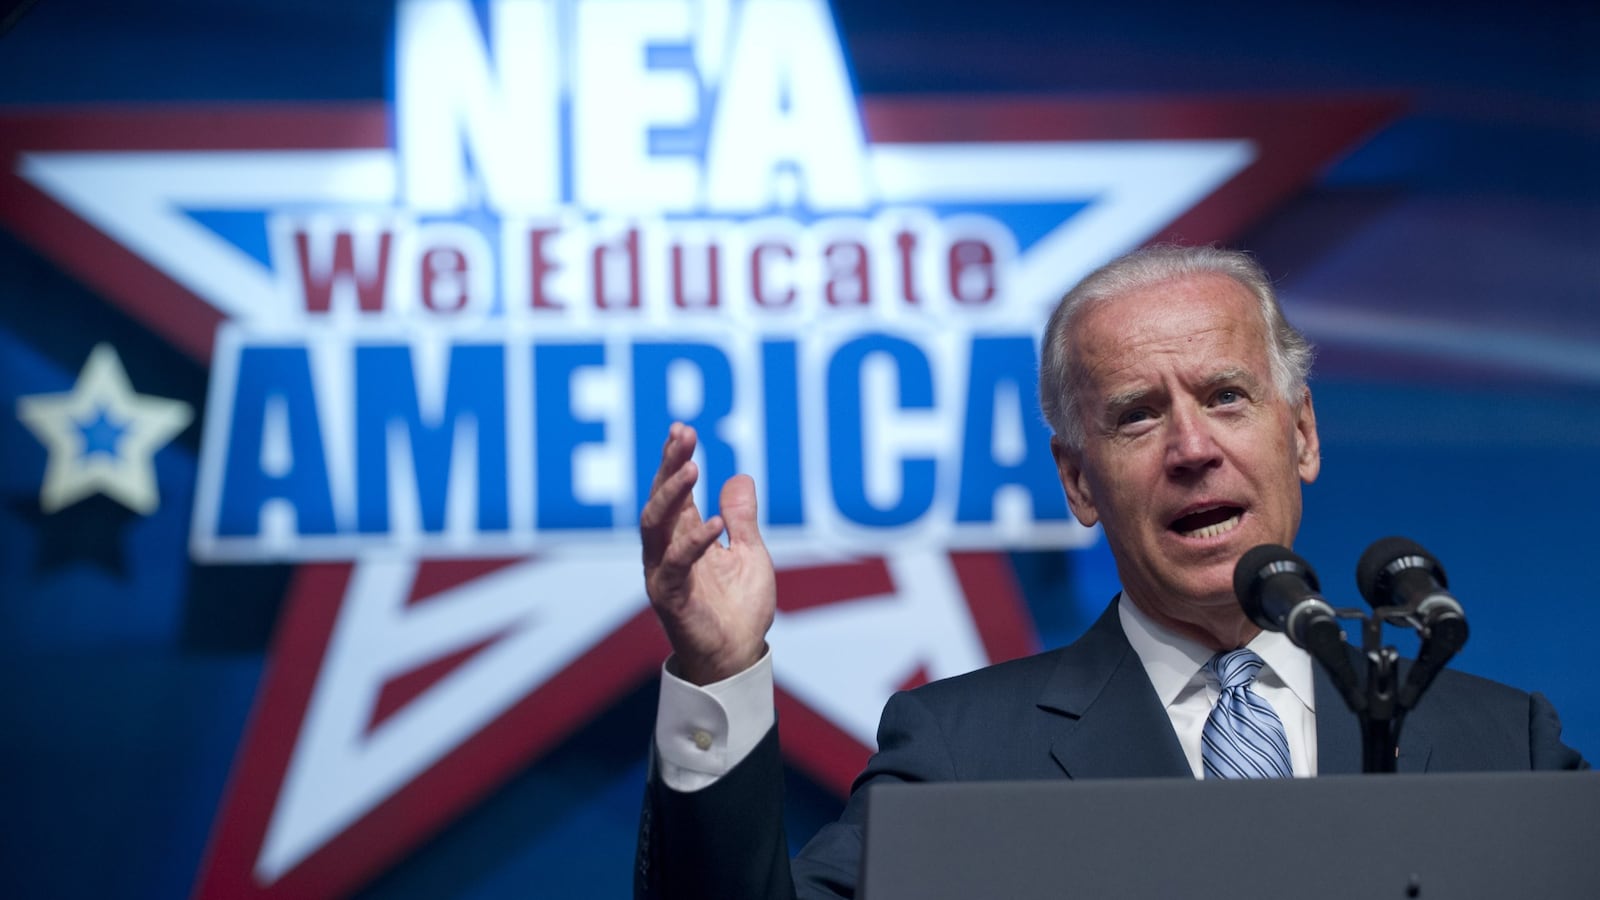 Joe Biden speaks during the National Education Association's annual meeting in 2012.